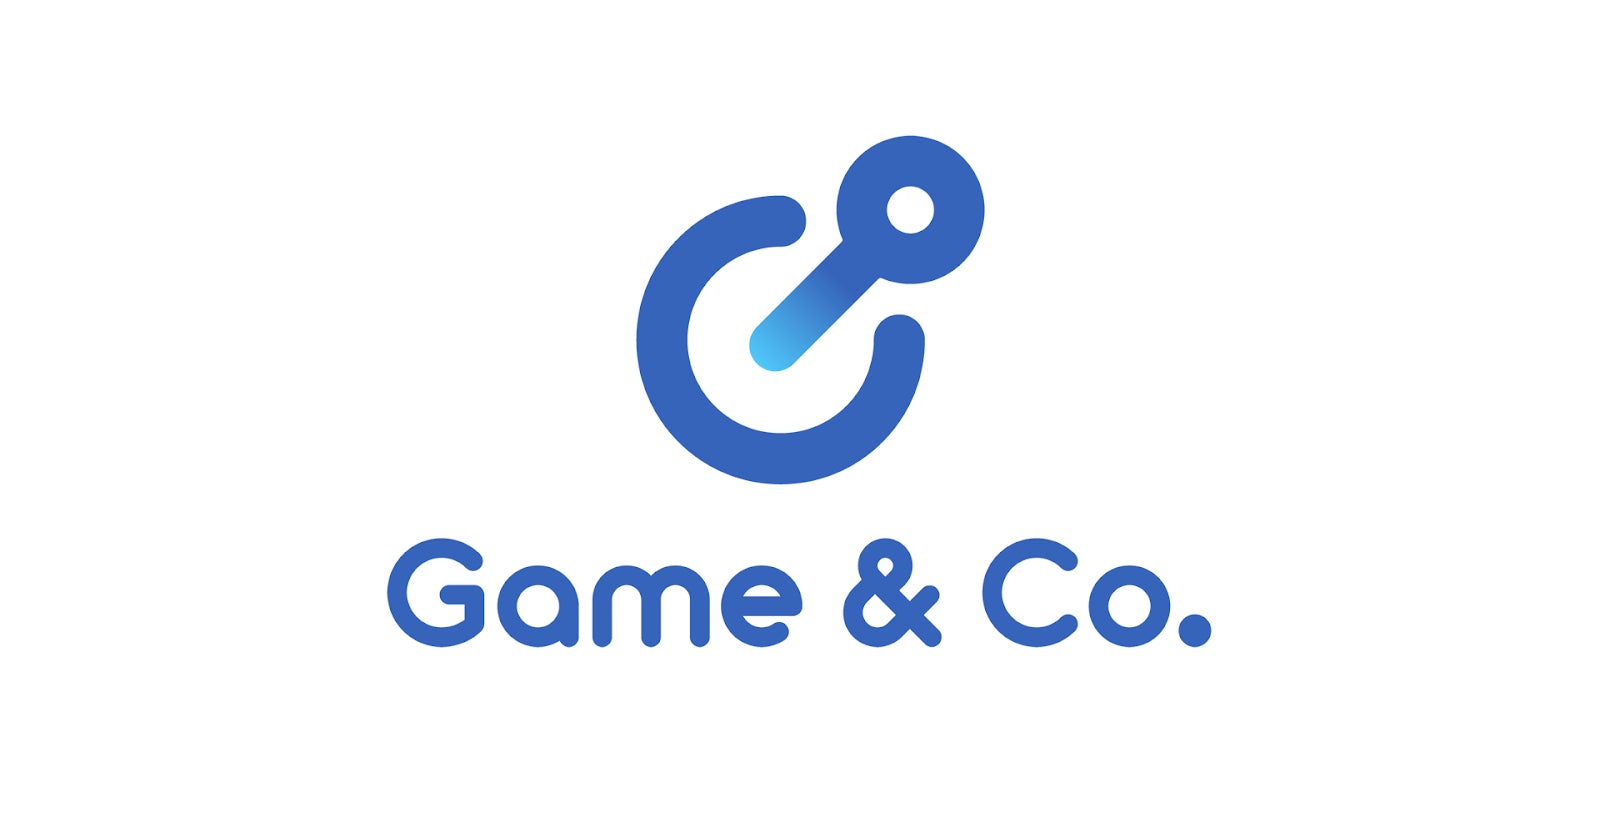 Brave groupがesports関連事業を行う子会社「Game & Co. 」を設立